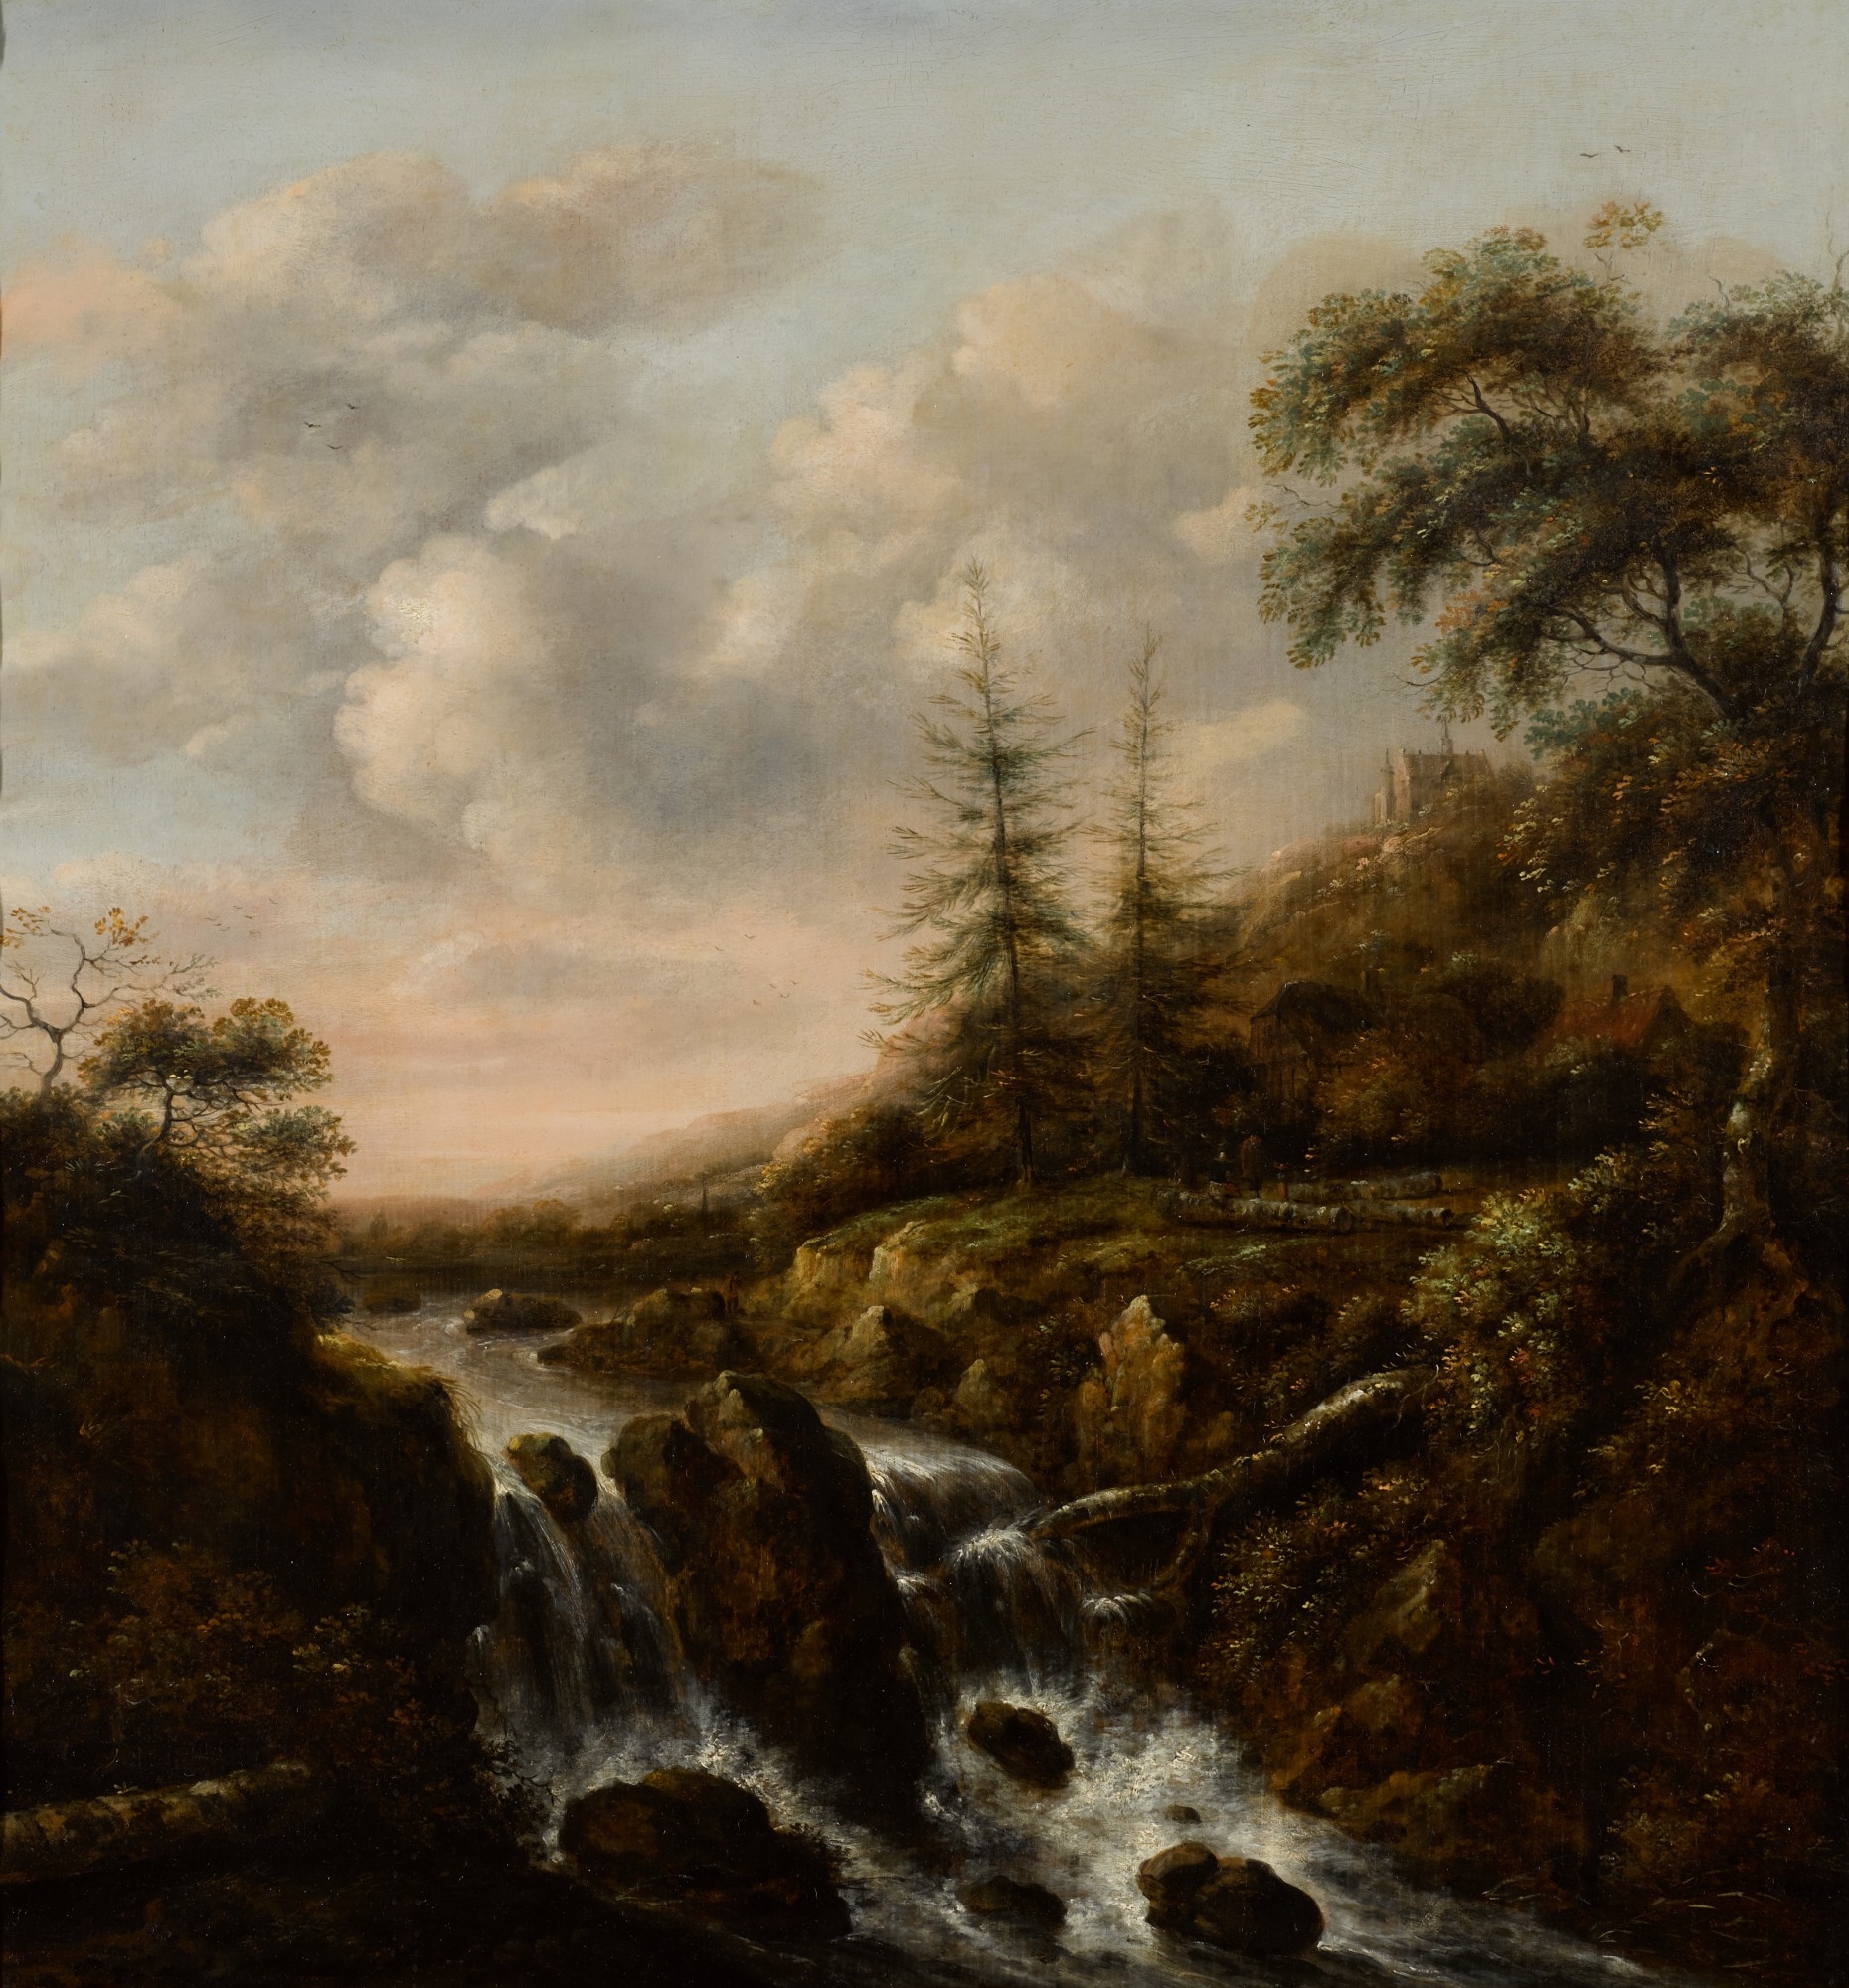 A waterfall in a mountainous river landscape by Klaes Molenaer, 1676